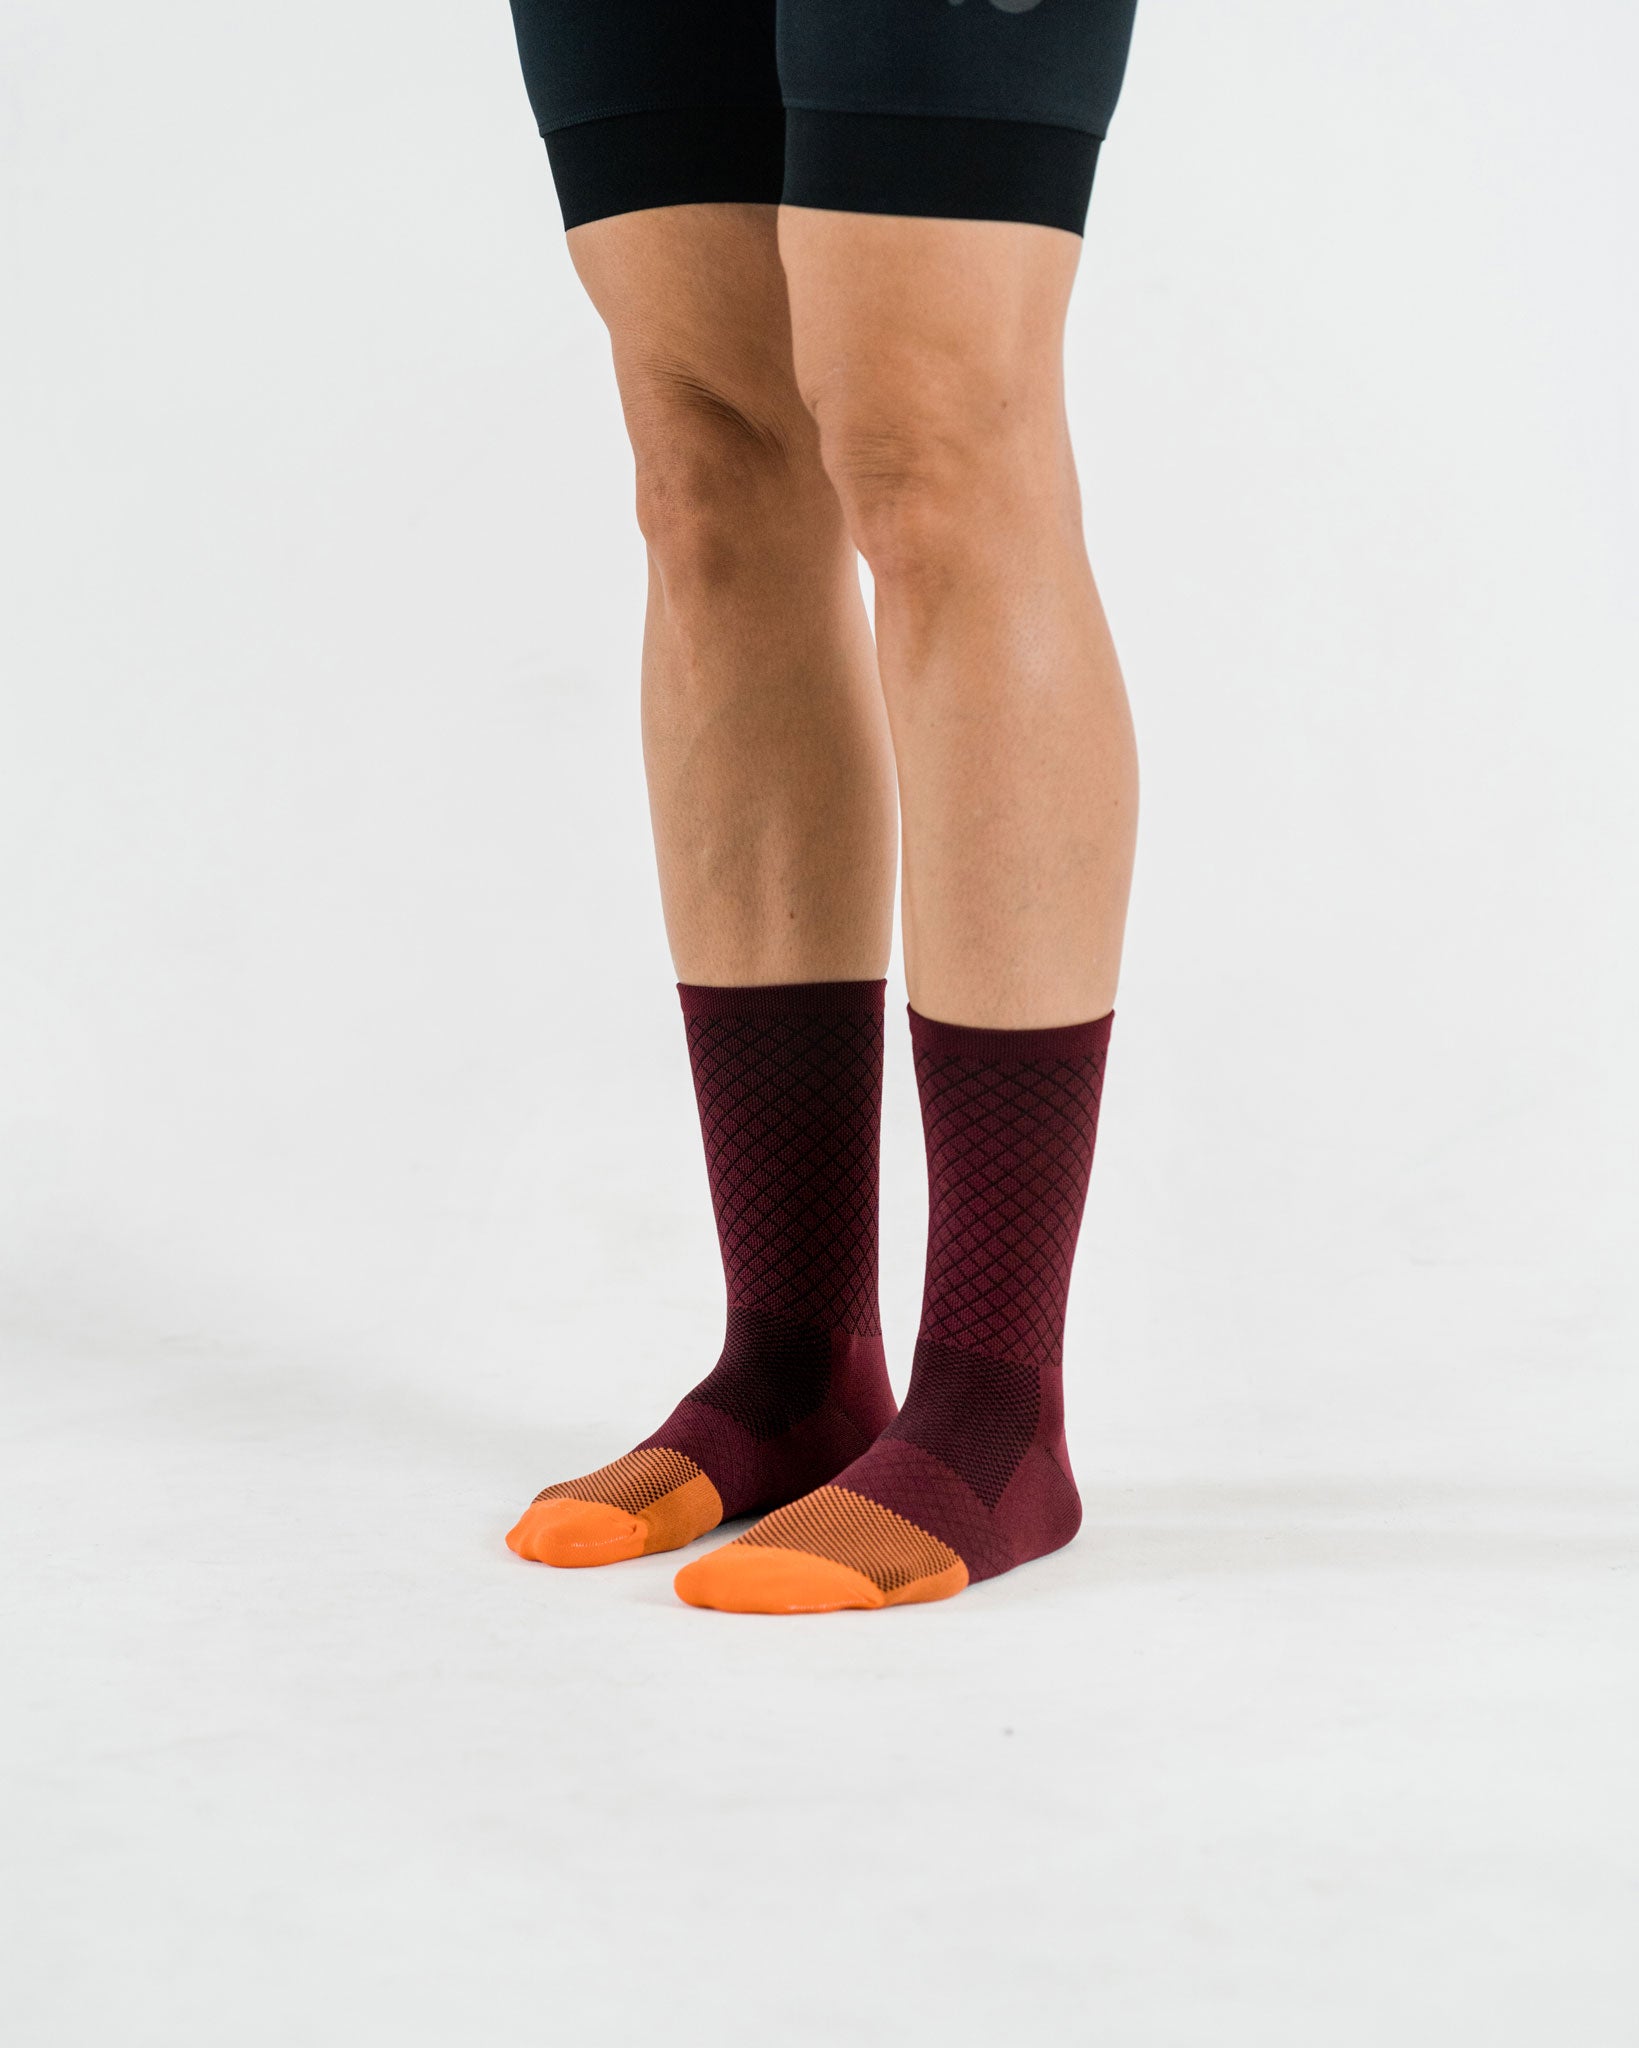 purple cycling socks with orange toebox